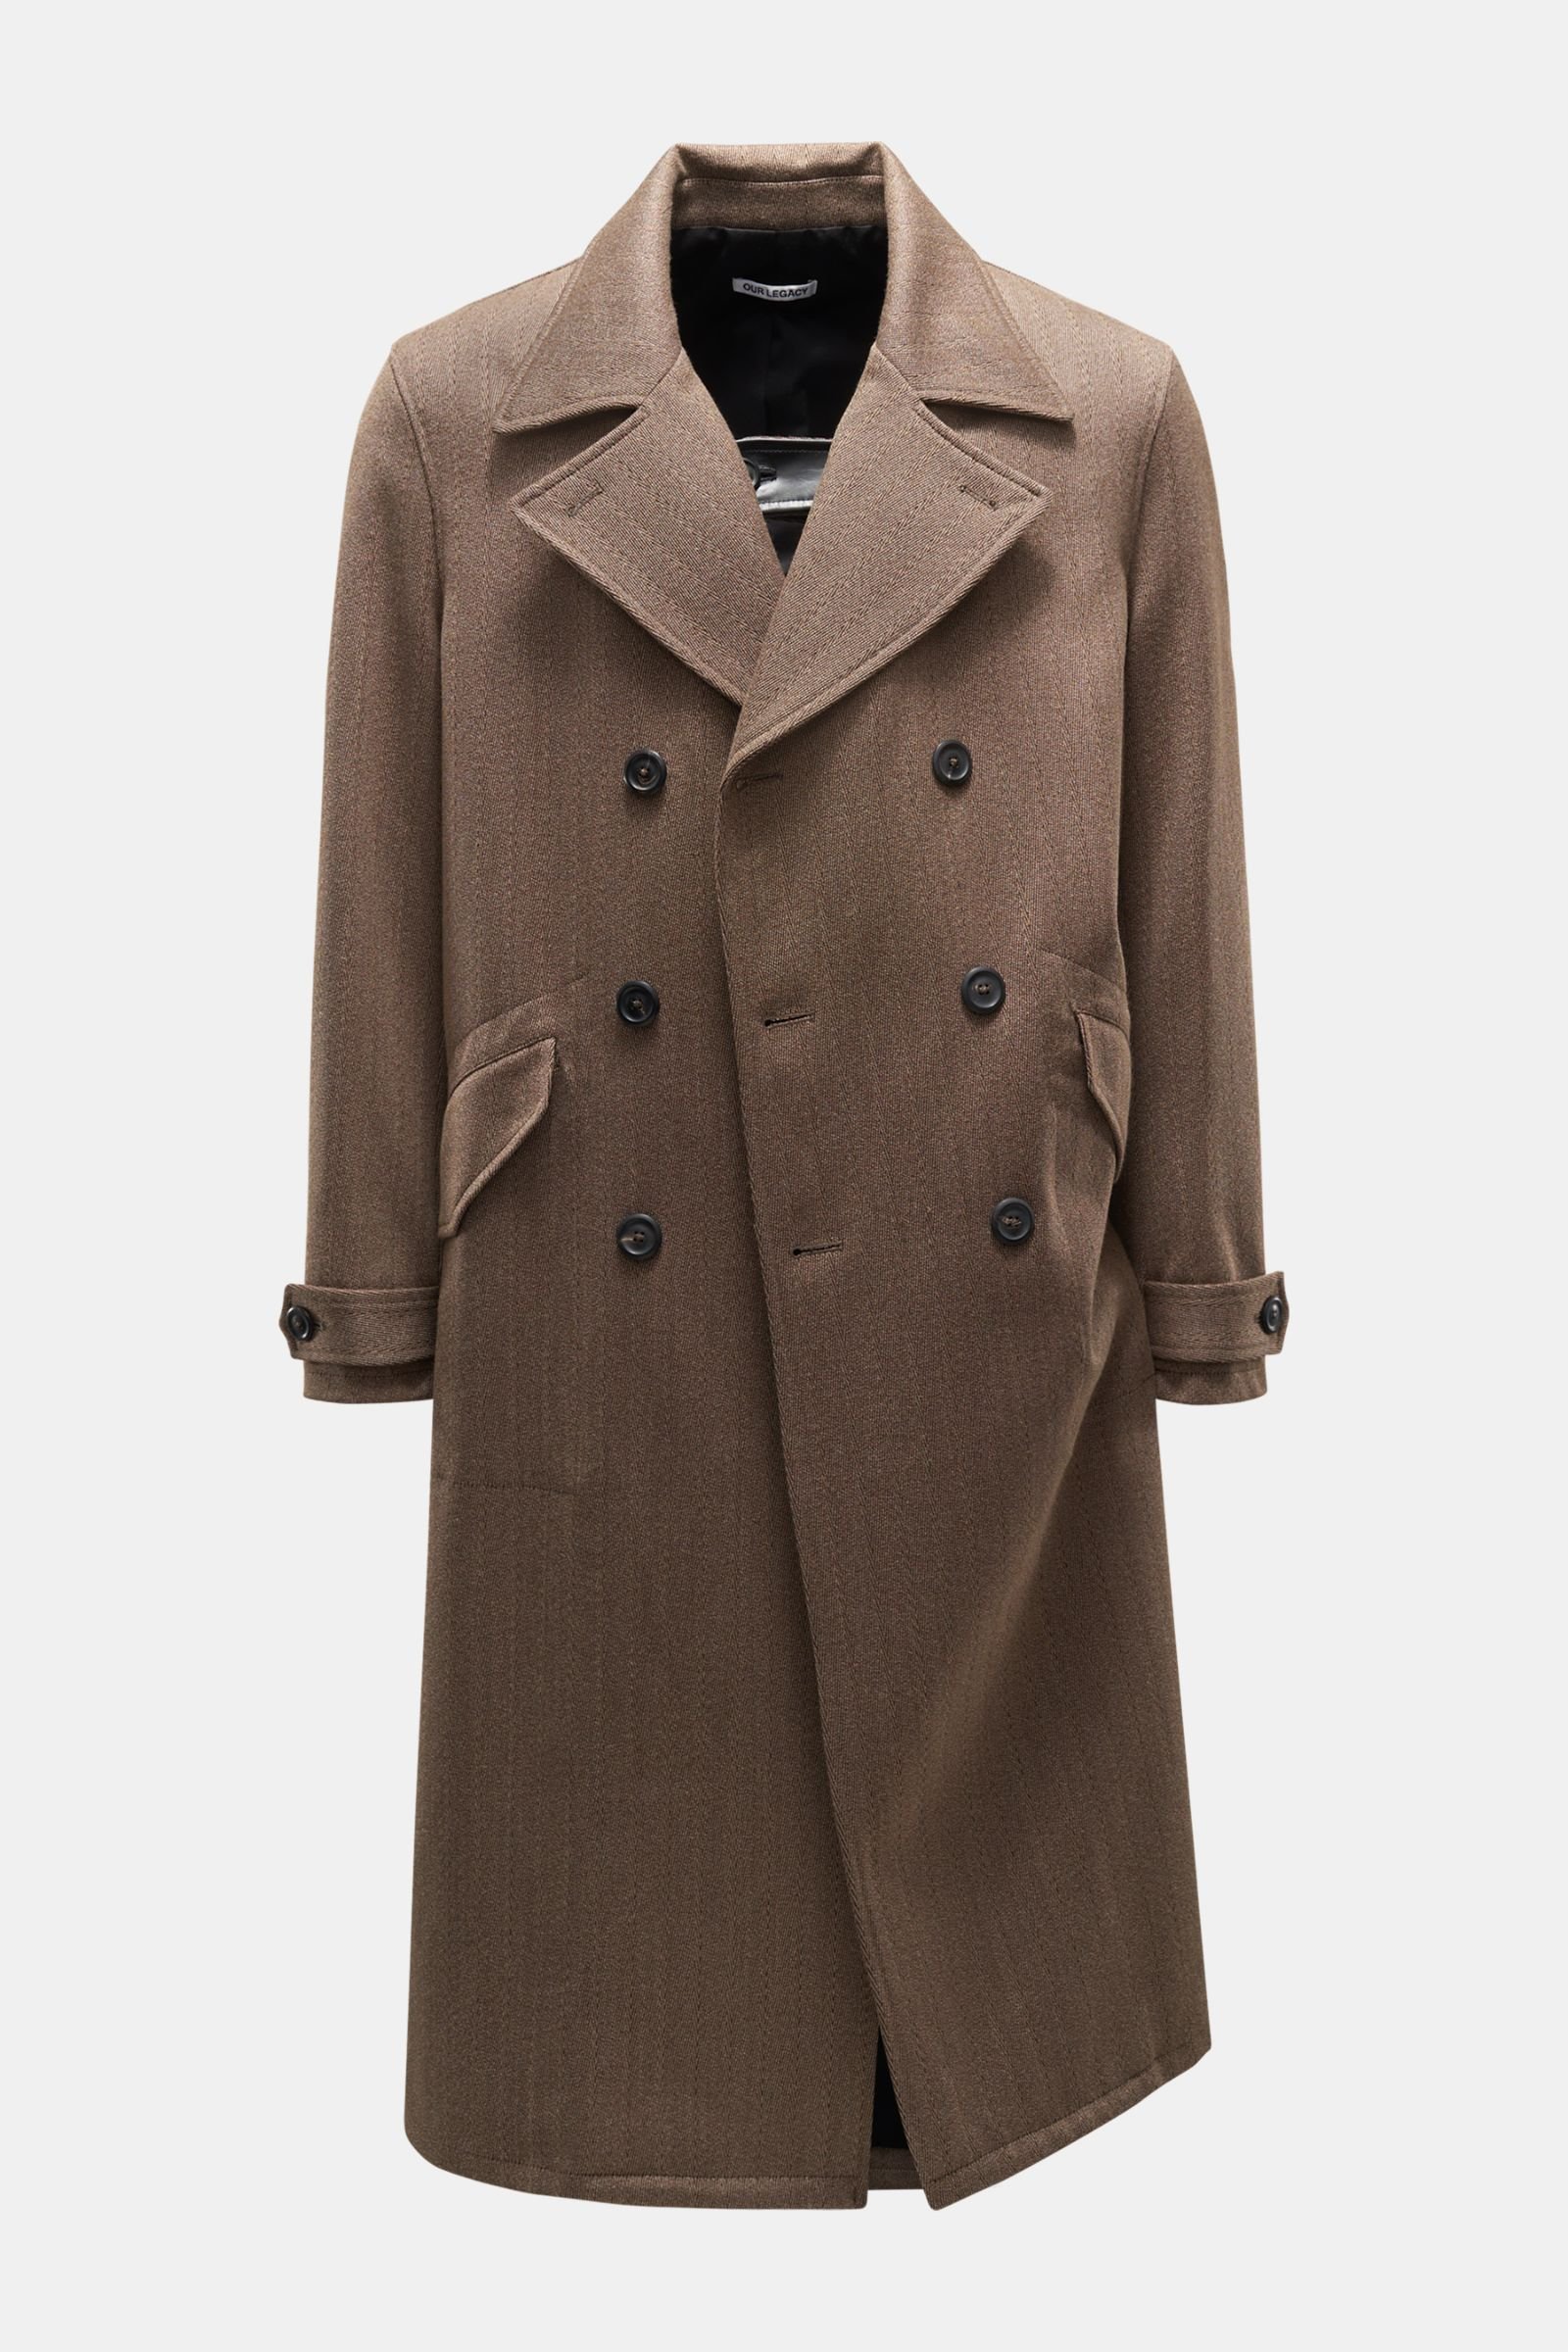 OUR LEGACY coat 'Long DB Buta Coat' grey-brown | BRAUN Hamburg